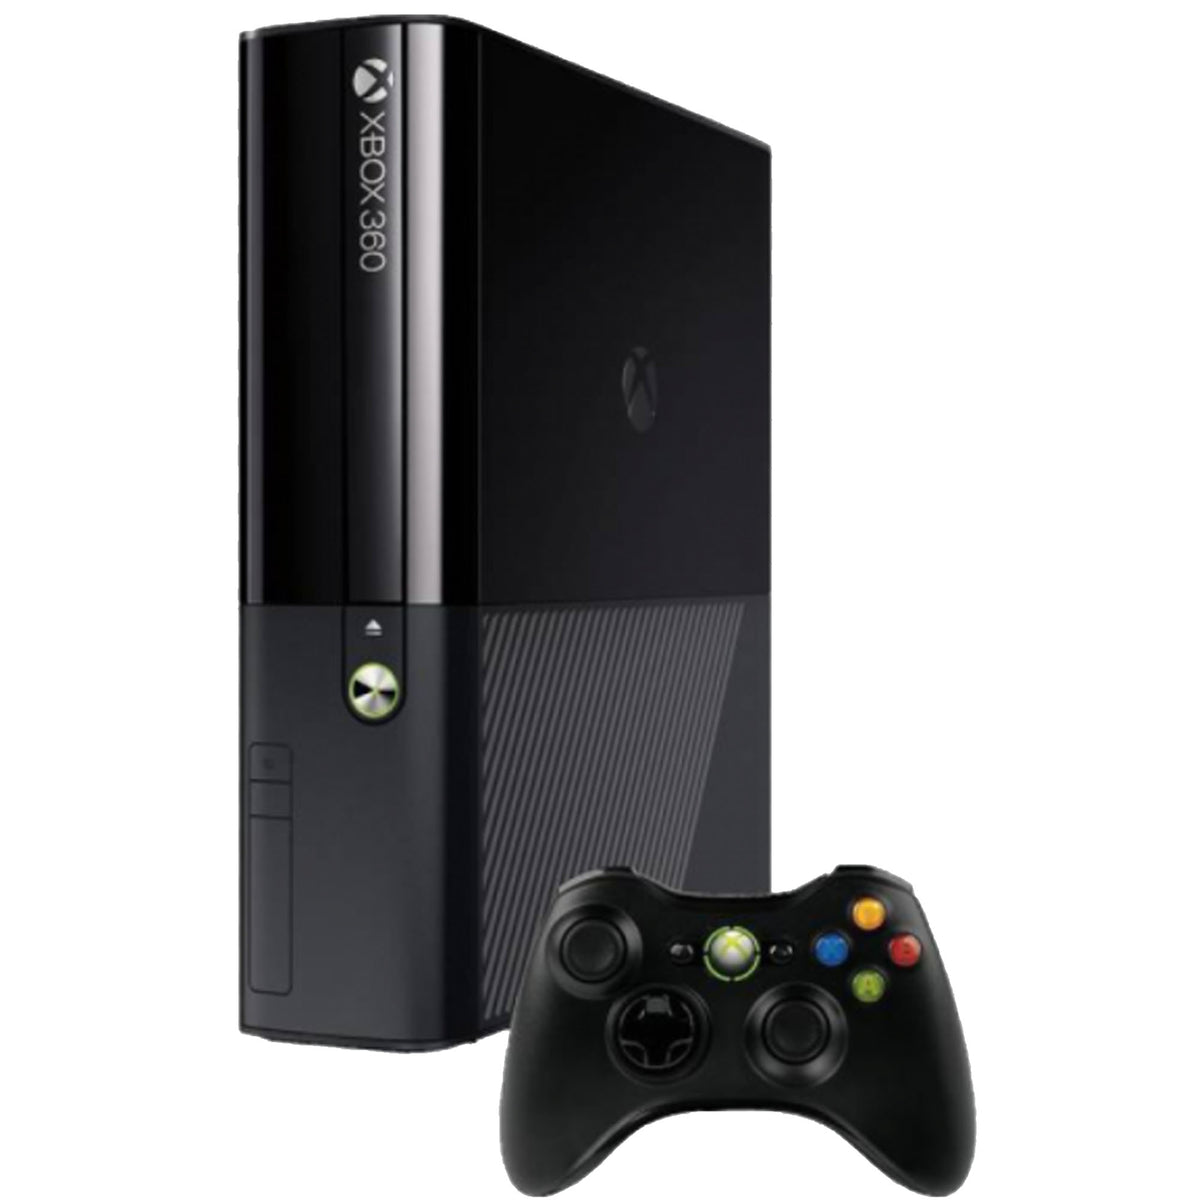 Xbox 360 life. Xbox 360 e 250gb. Xbox 360 е 500 ГБ. Приставка Xbox 360e 500 GB. Хбокс 360 слим.